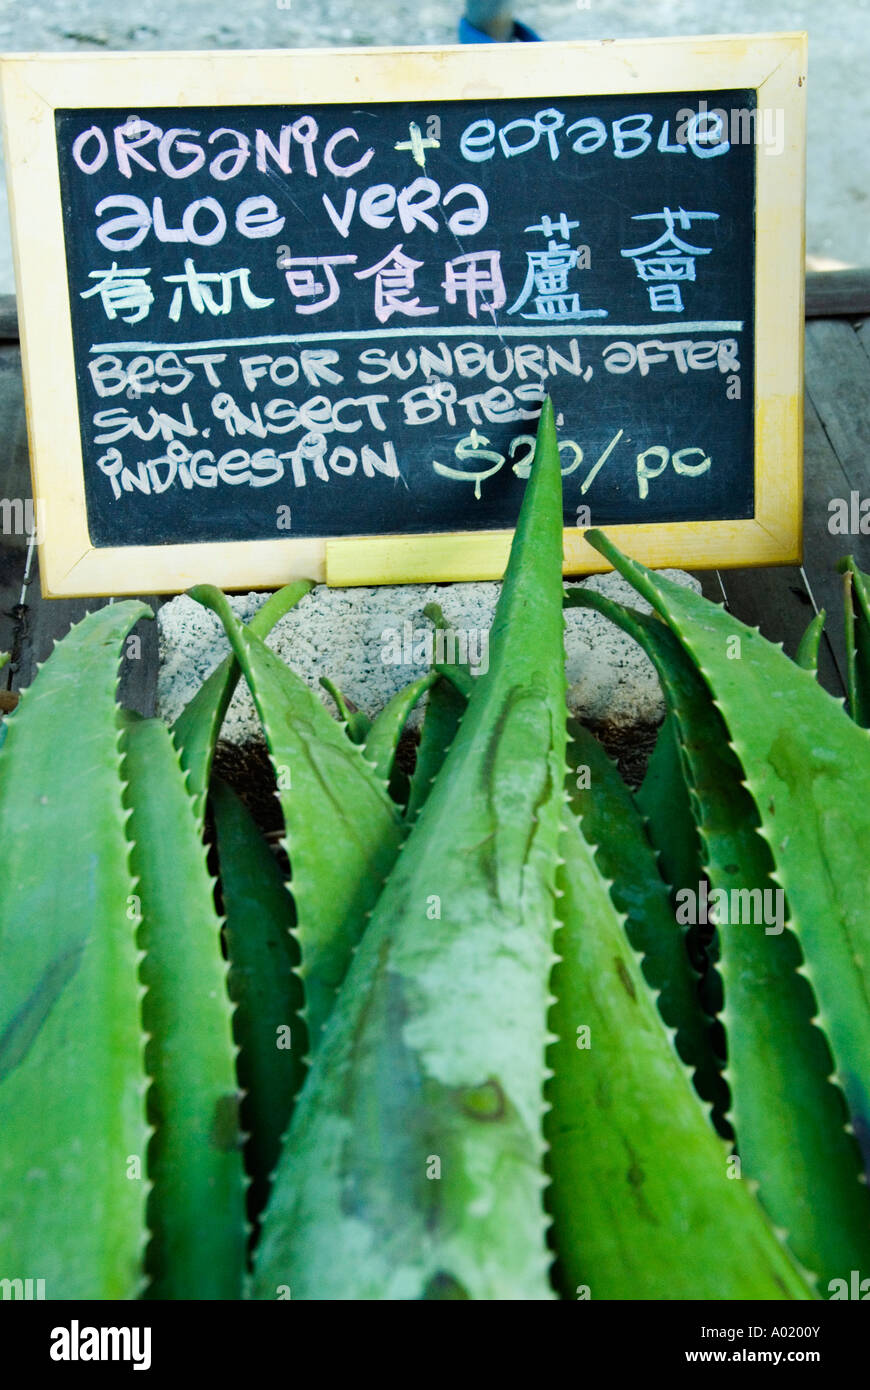 Organically grown Aloe vera plants for sale in organic herb farm shop on Lamma Island in Hong Kong Stock Photo